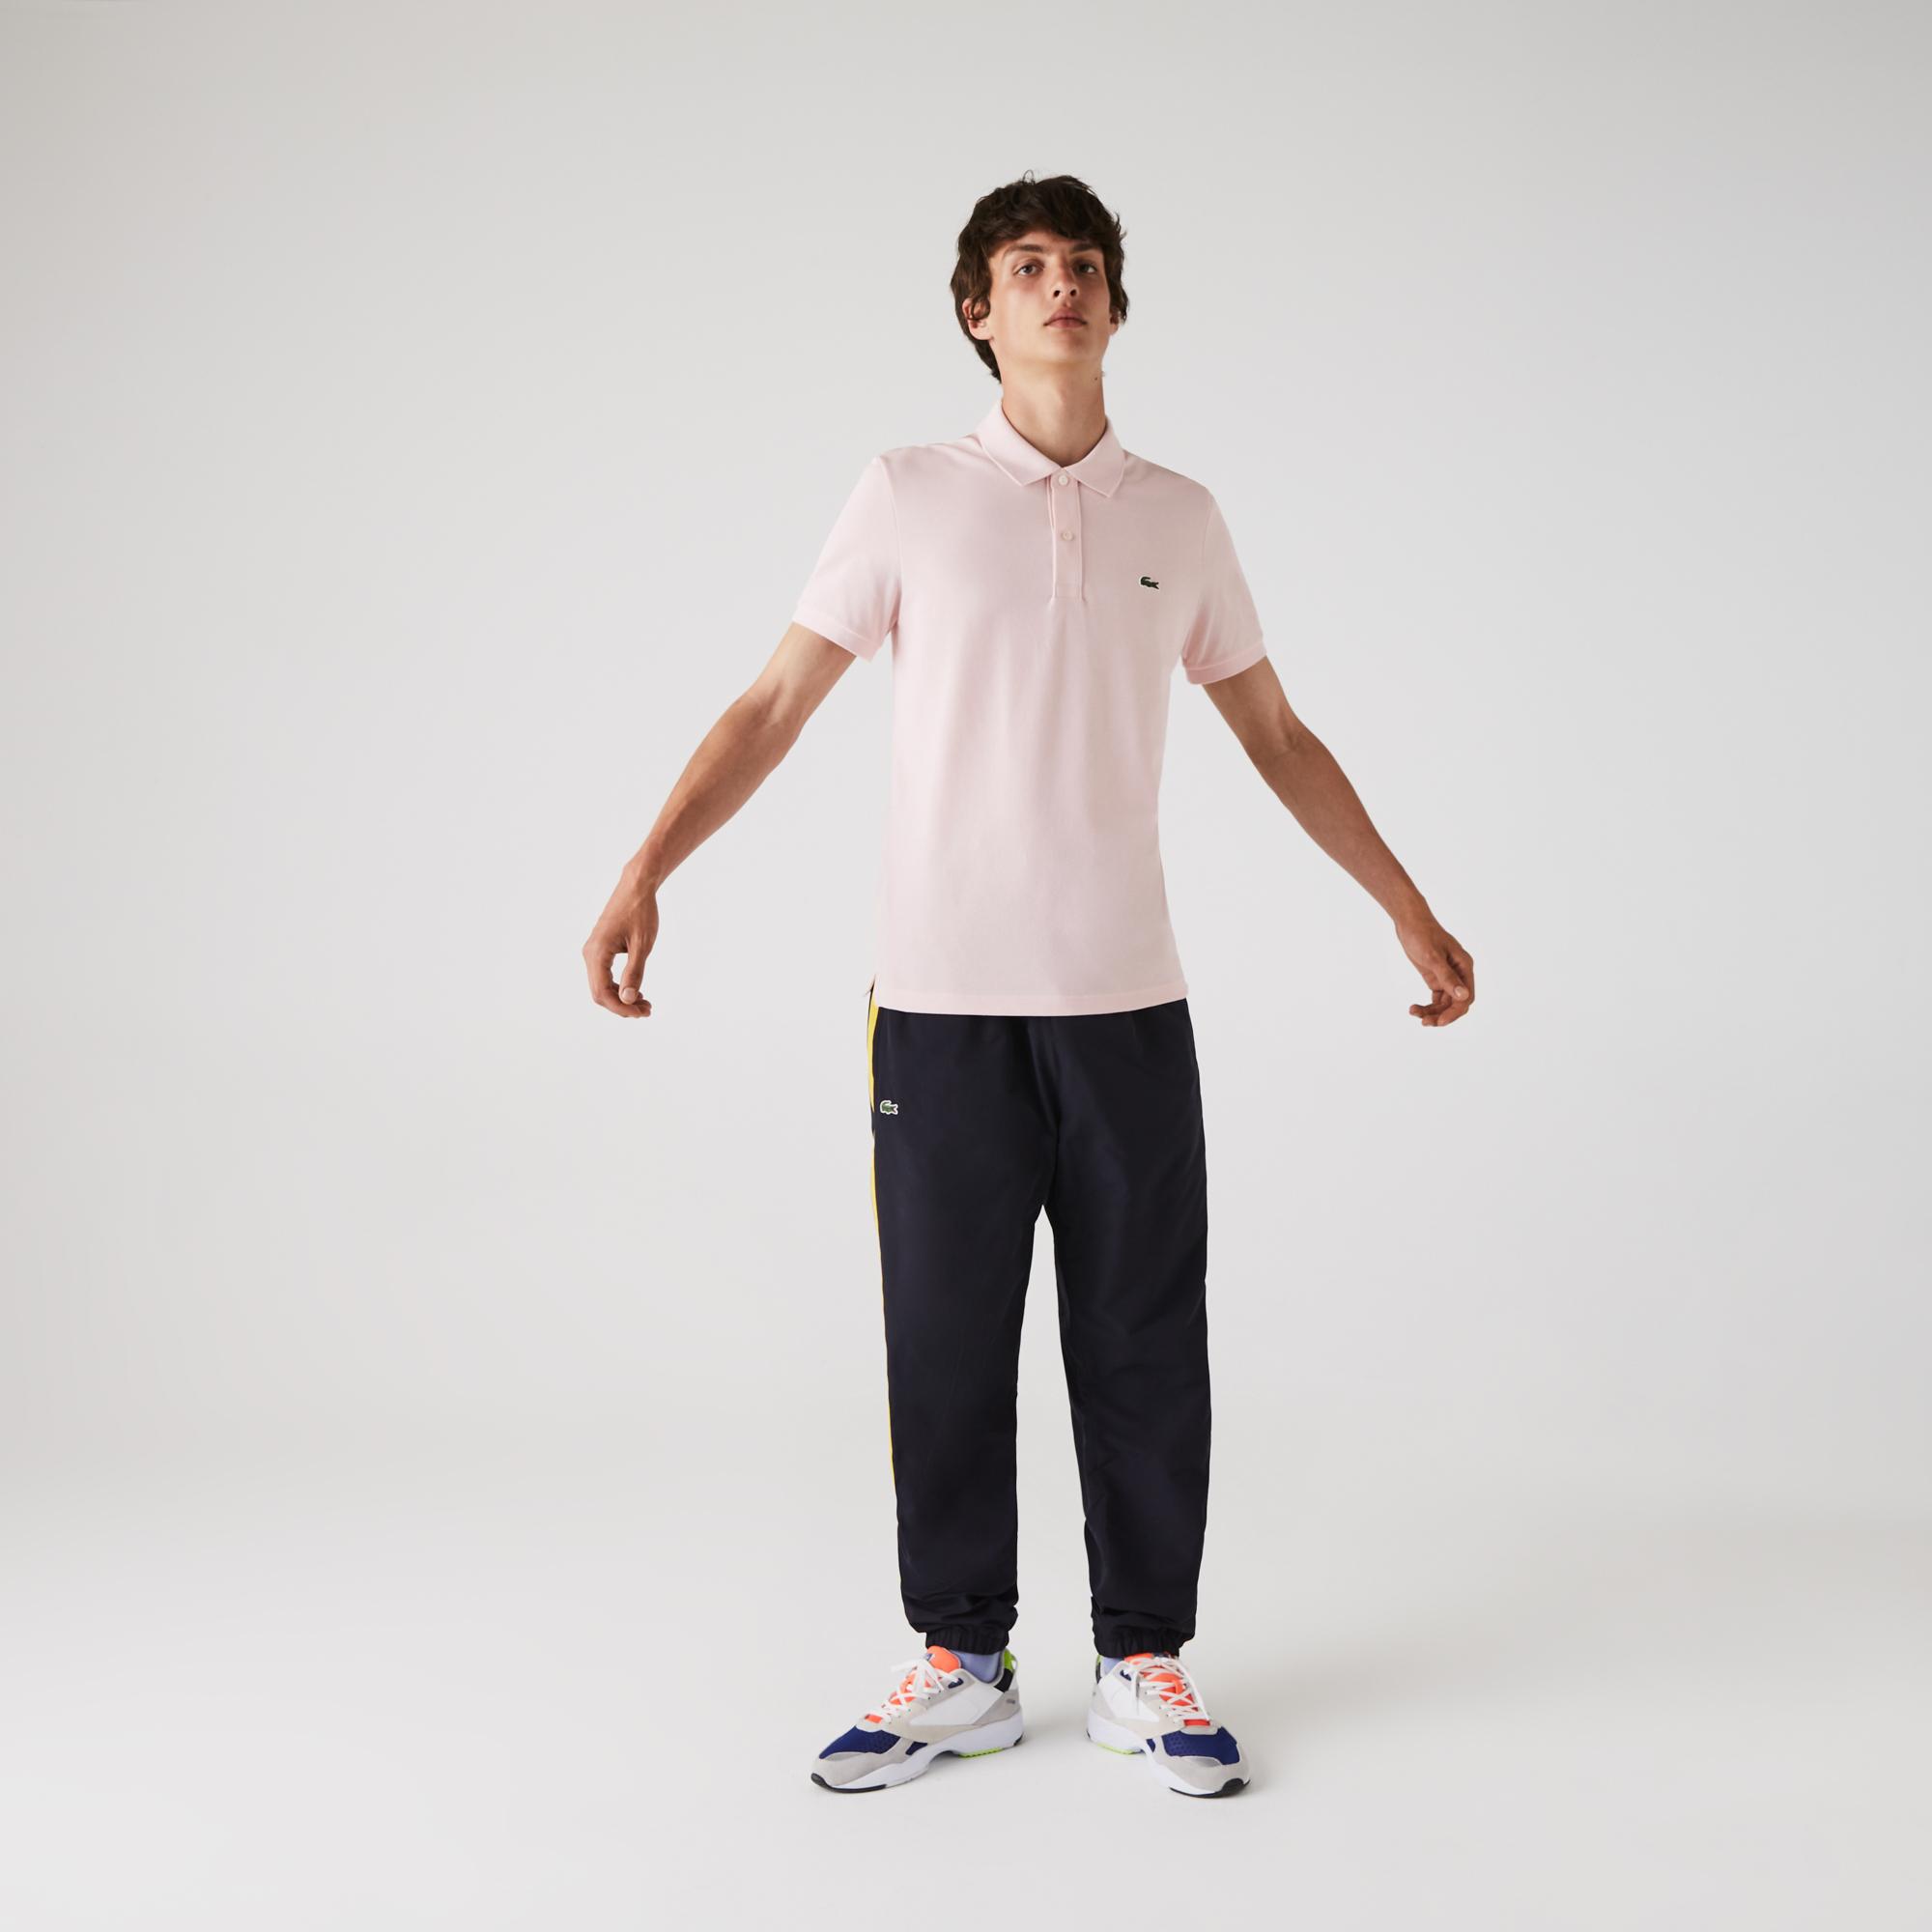 Lacoste Men's Slim Fit Light Pink Polo